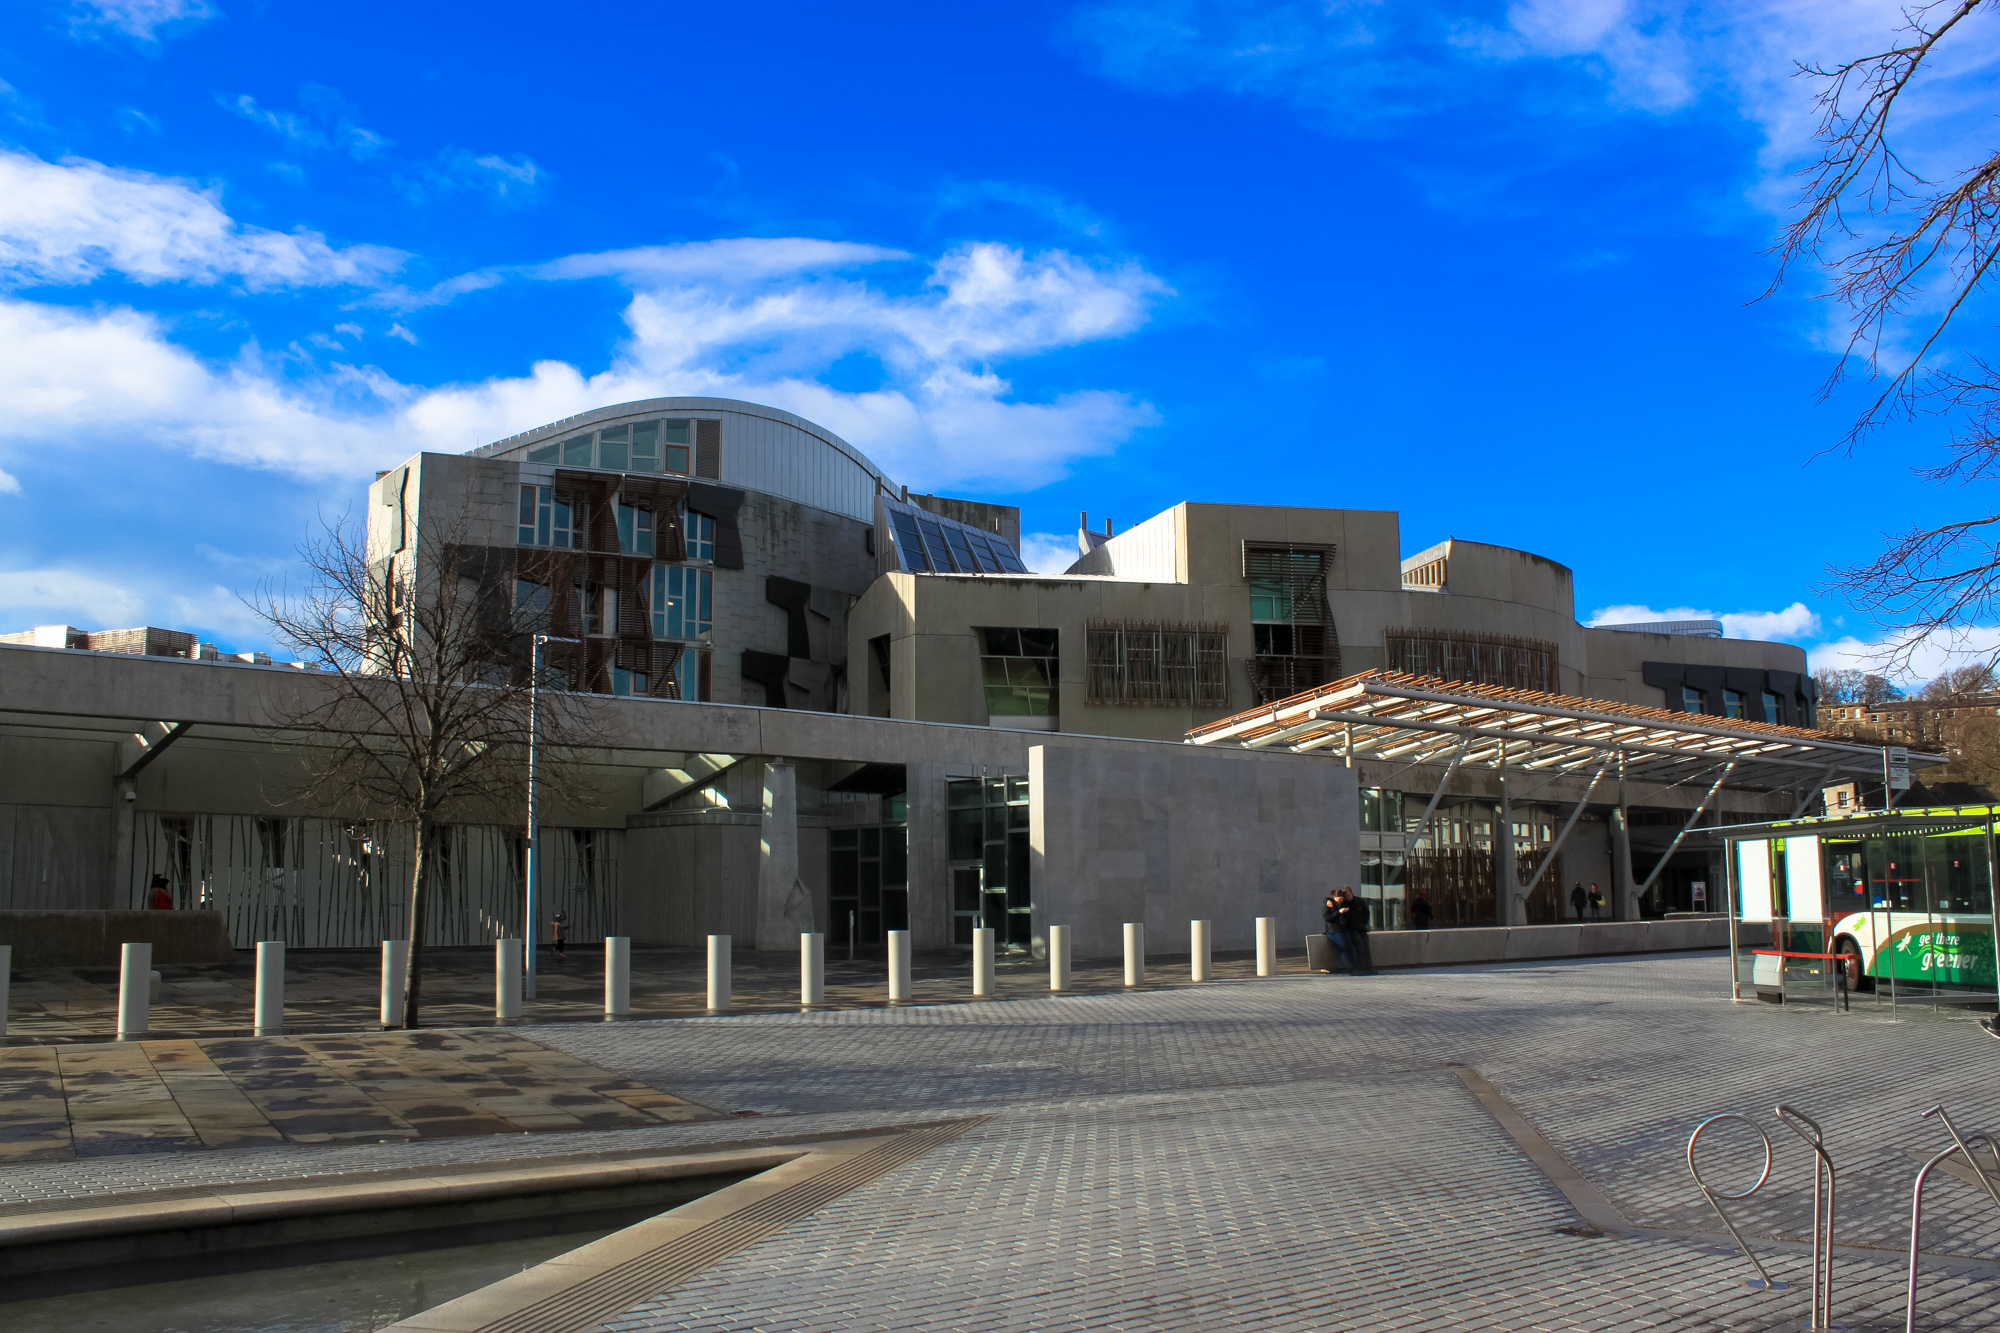 Image of the Scottish Parliament